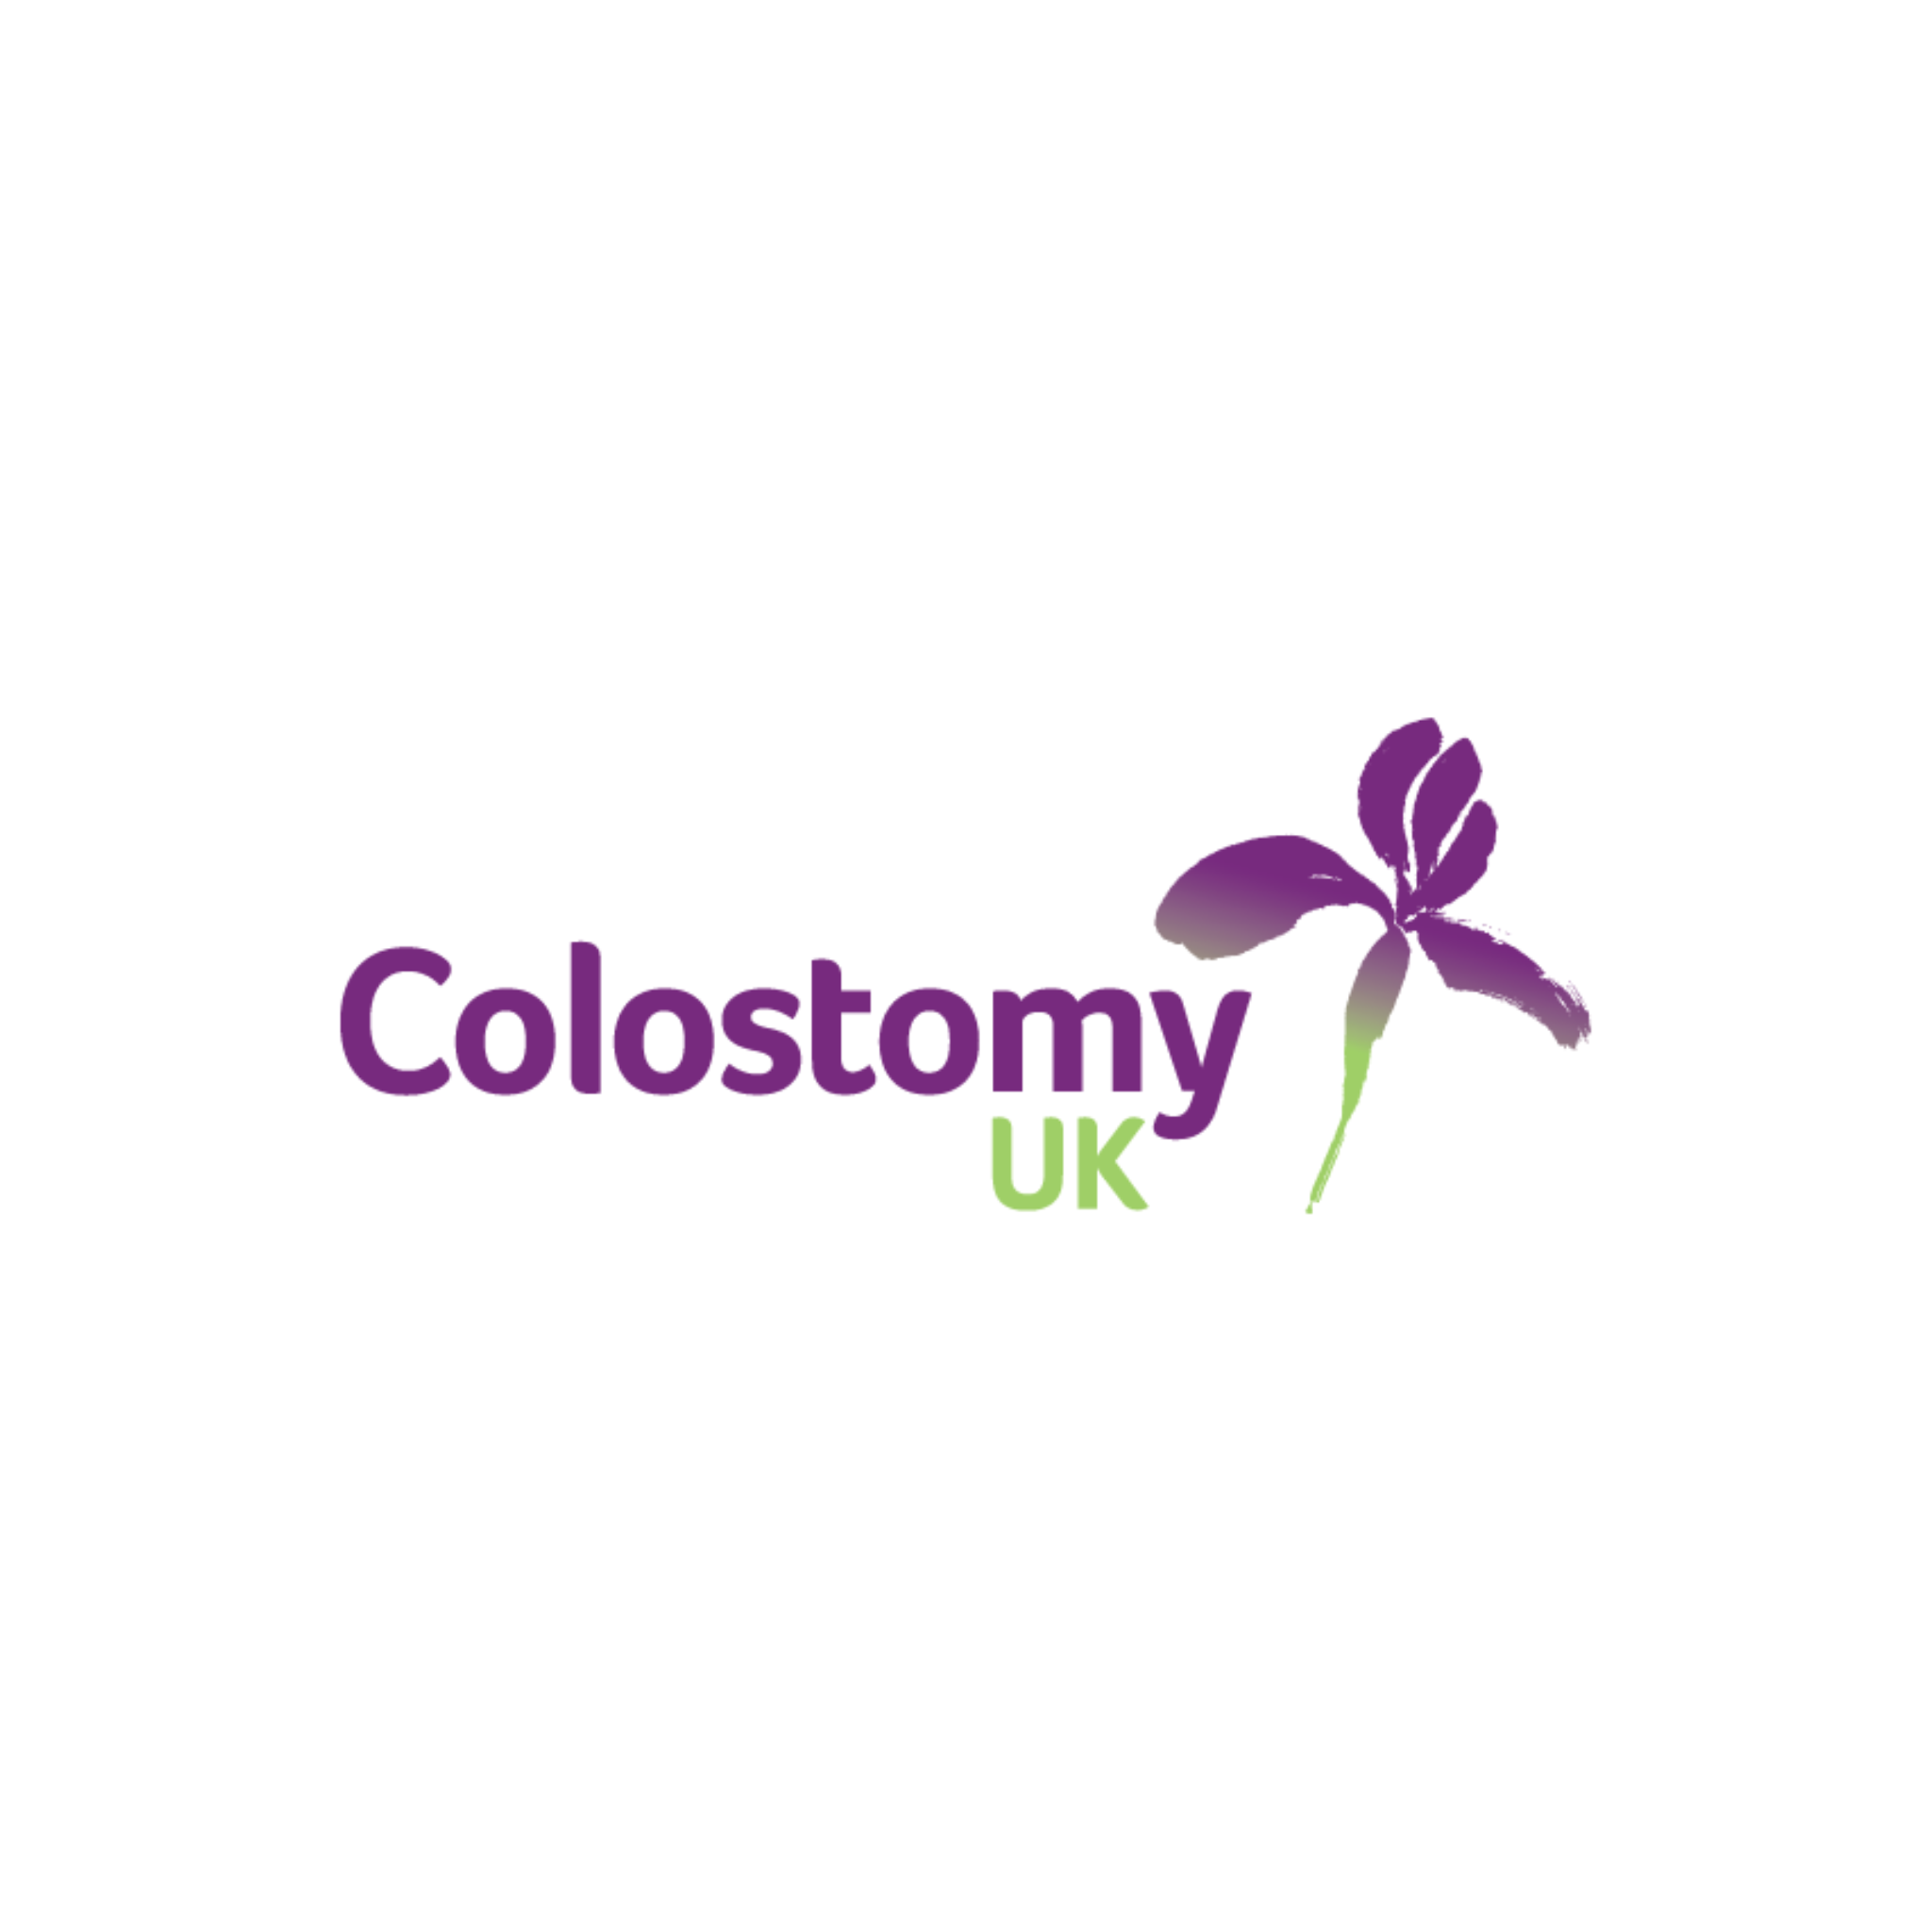 Colostomy UK